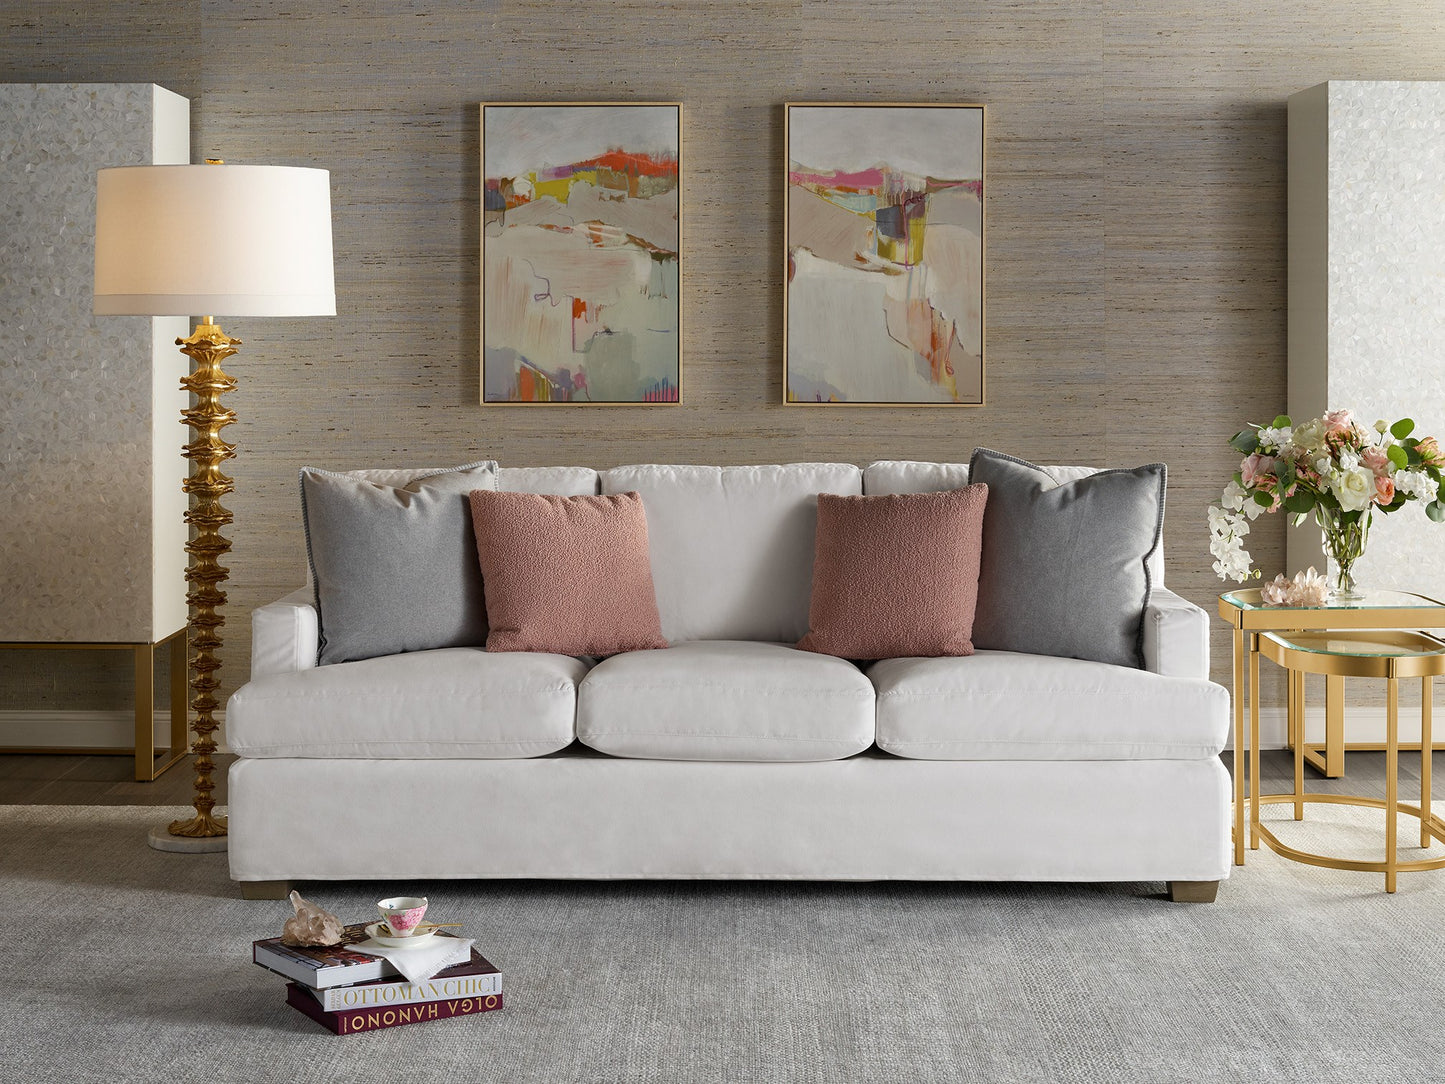 Malibu Slipcover Sofa